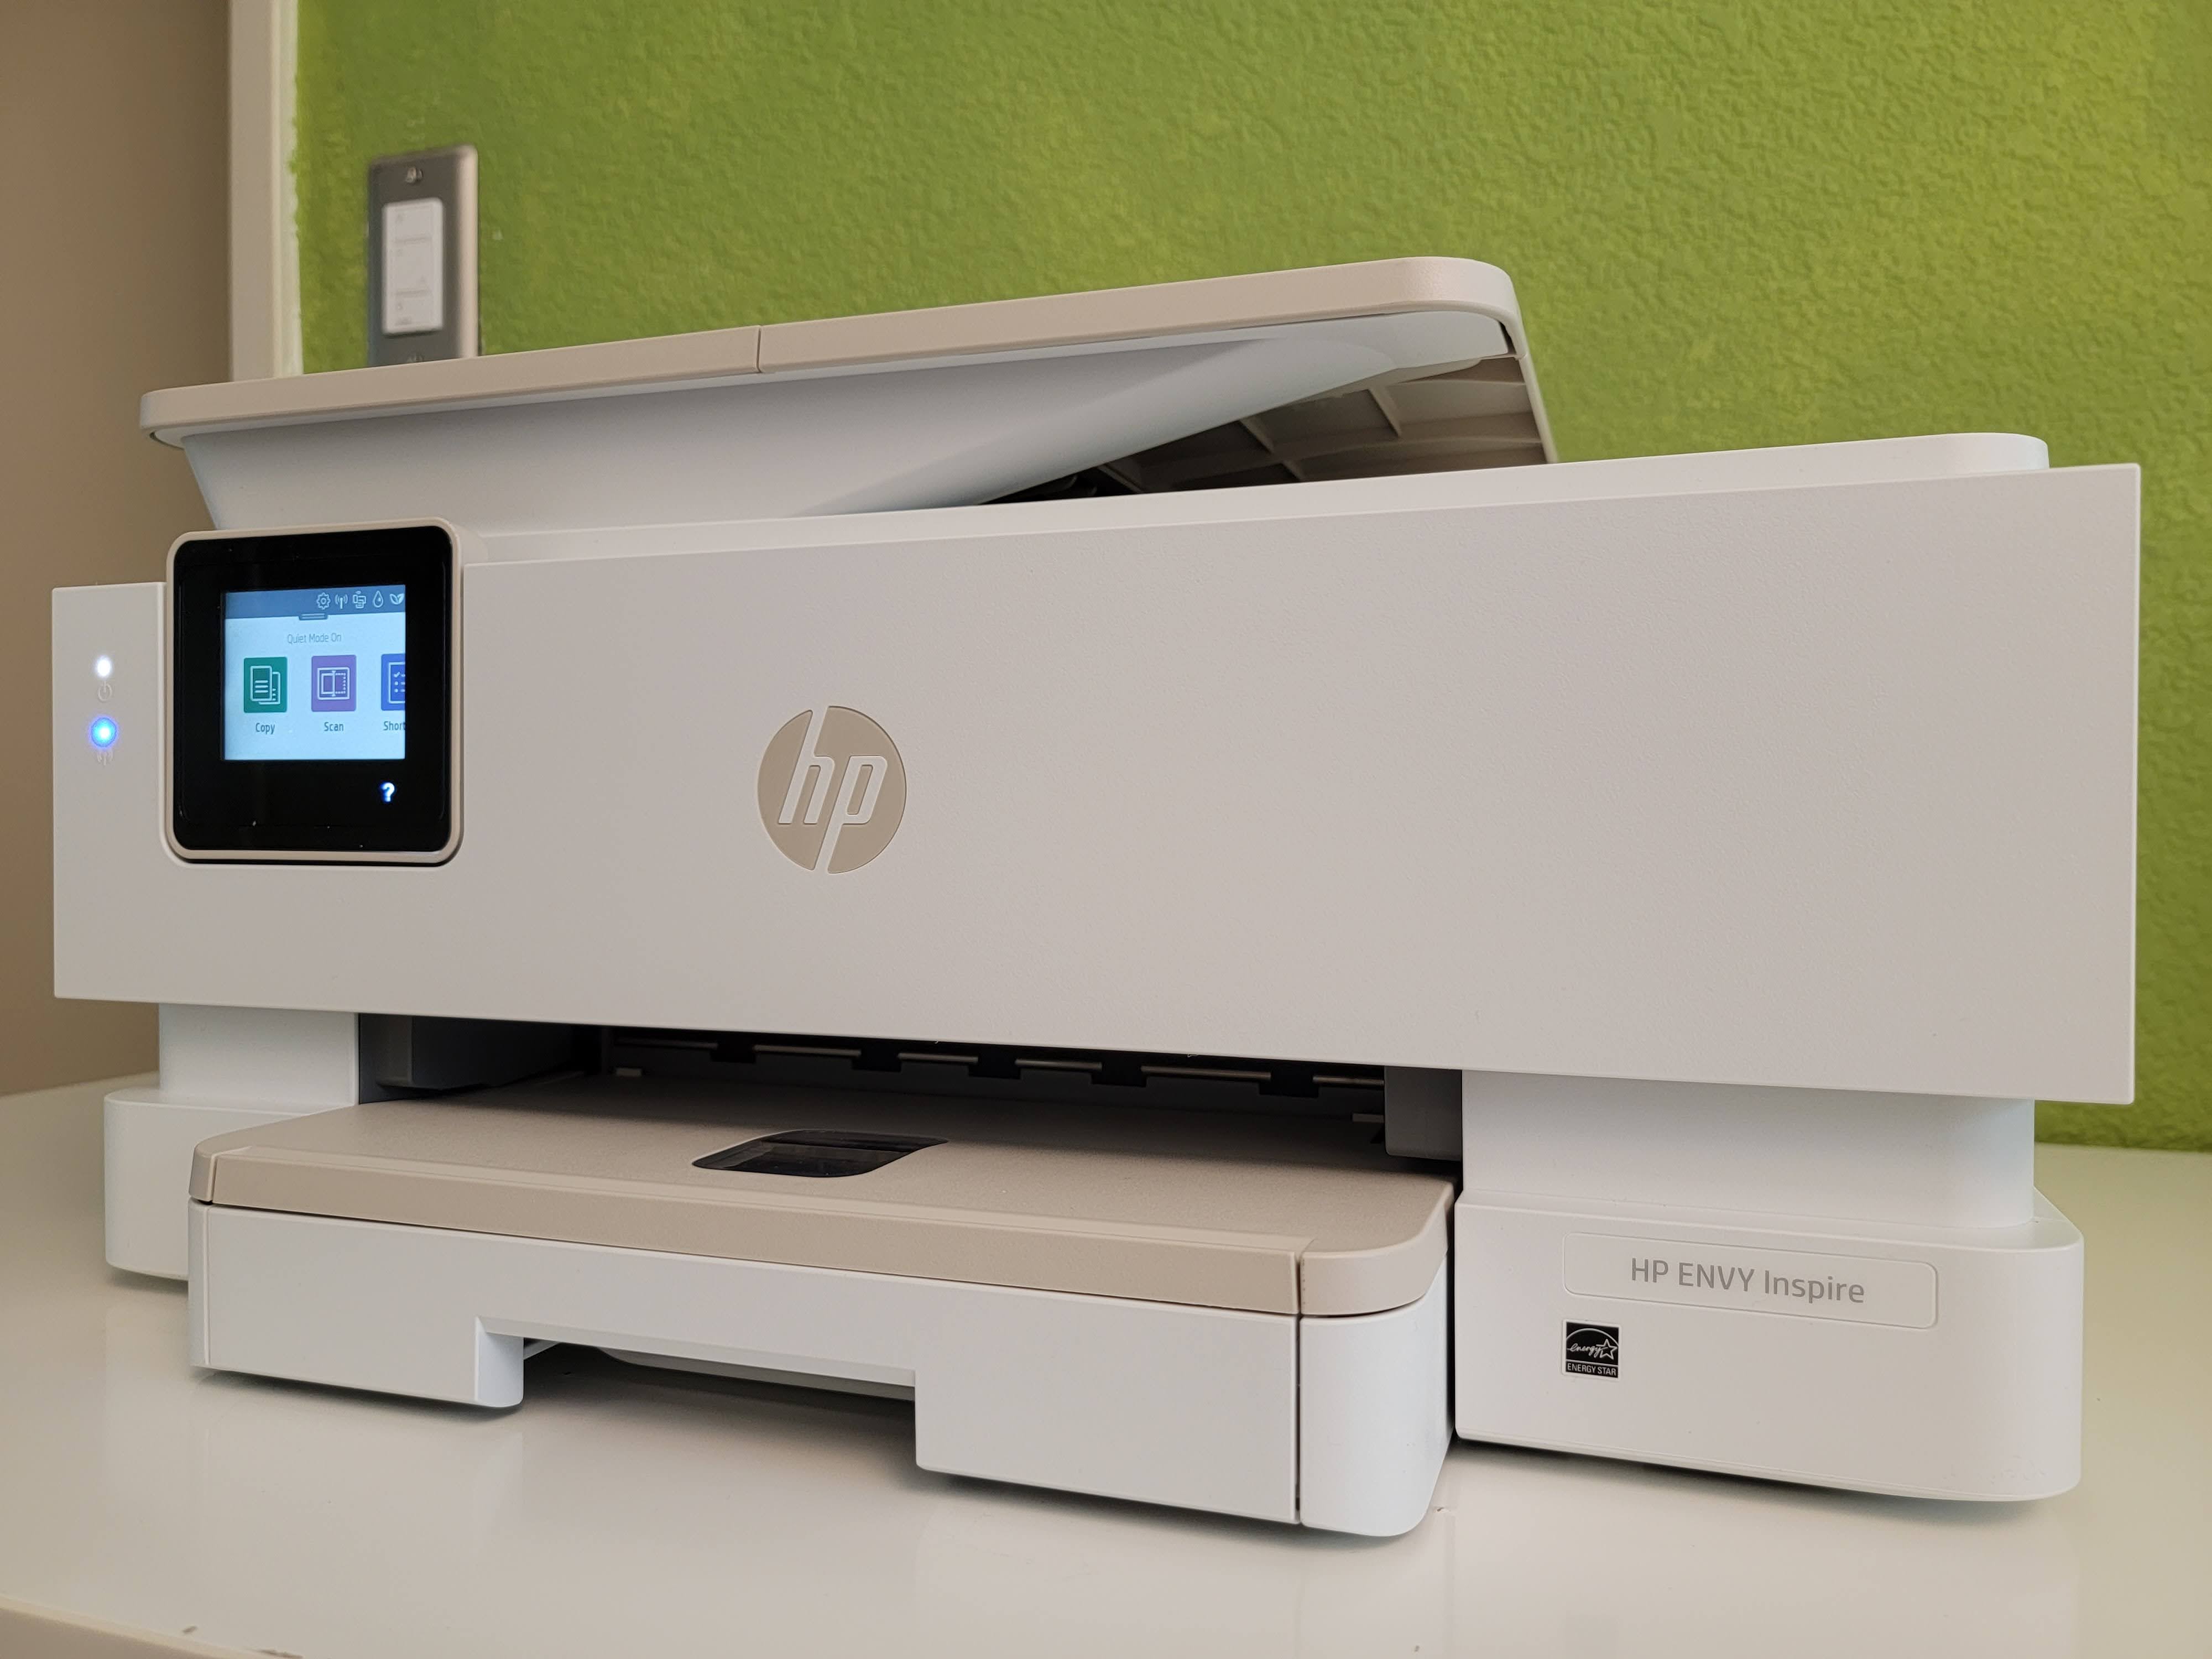 HP Envy Inspire 7900e Review: A Versatile Office Printer